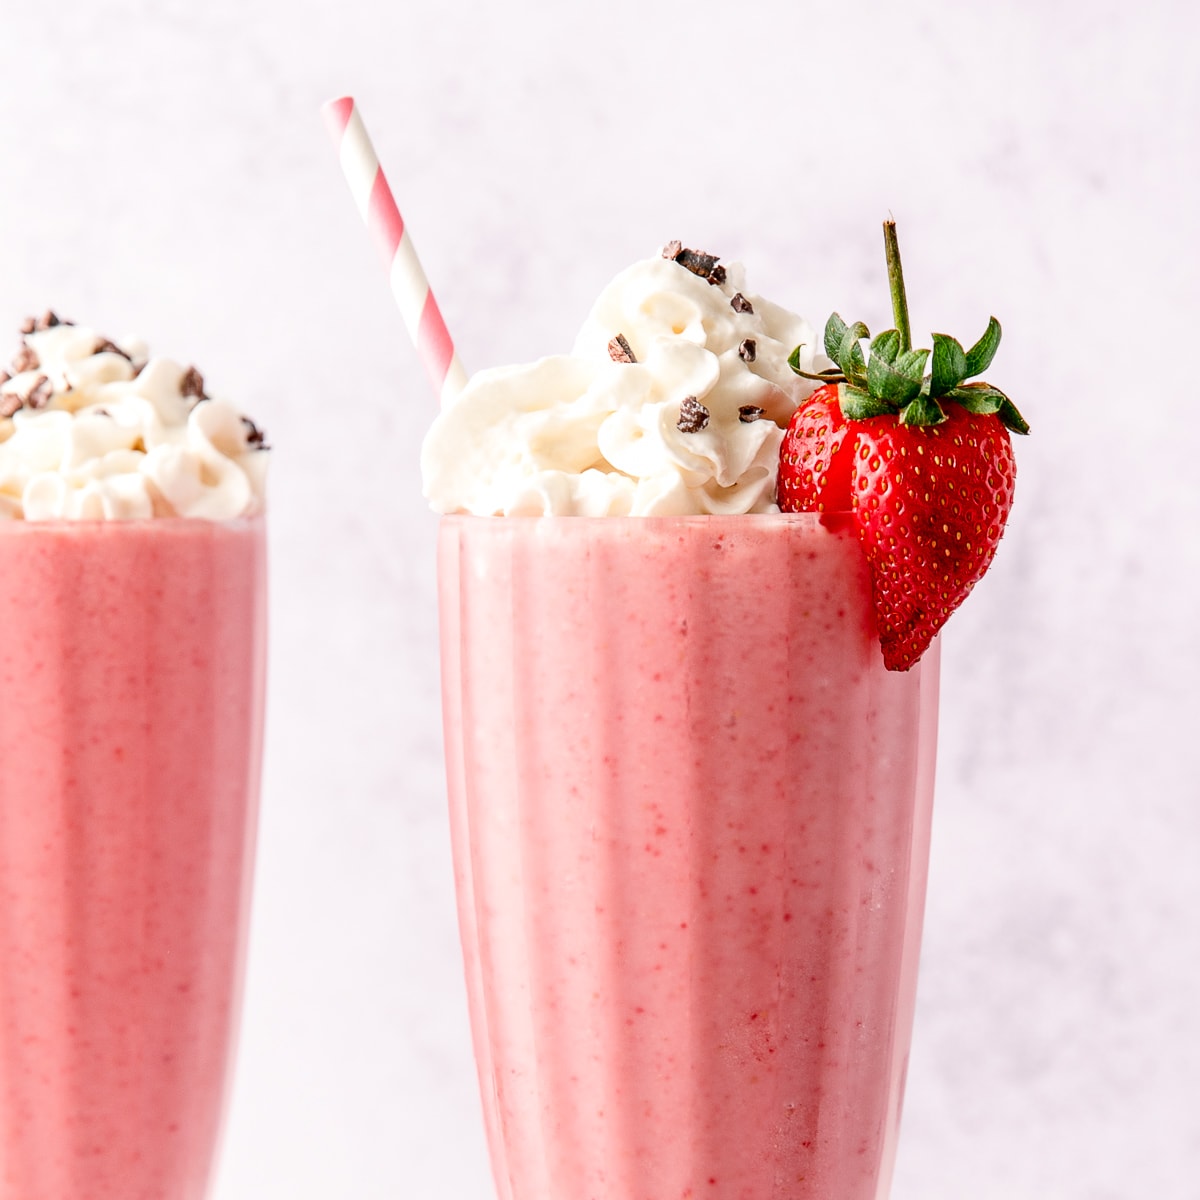 Vegan Strawberry Milkshake (Healthy, Easy, Creamy) - The Simple Veganista